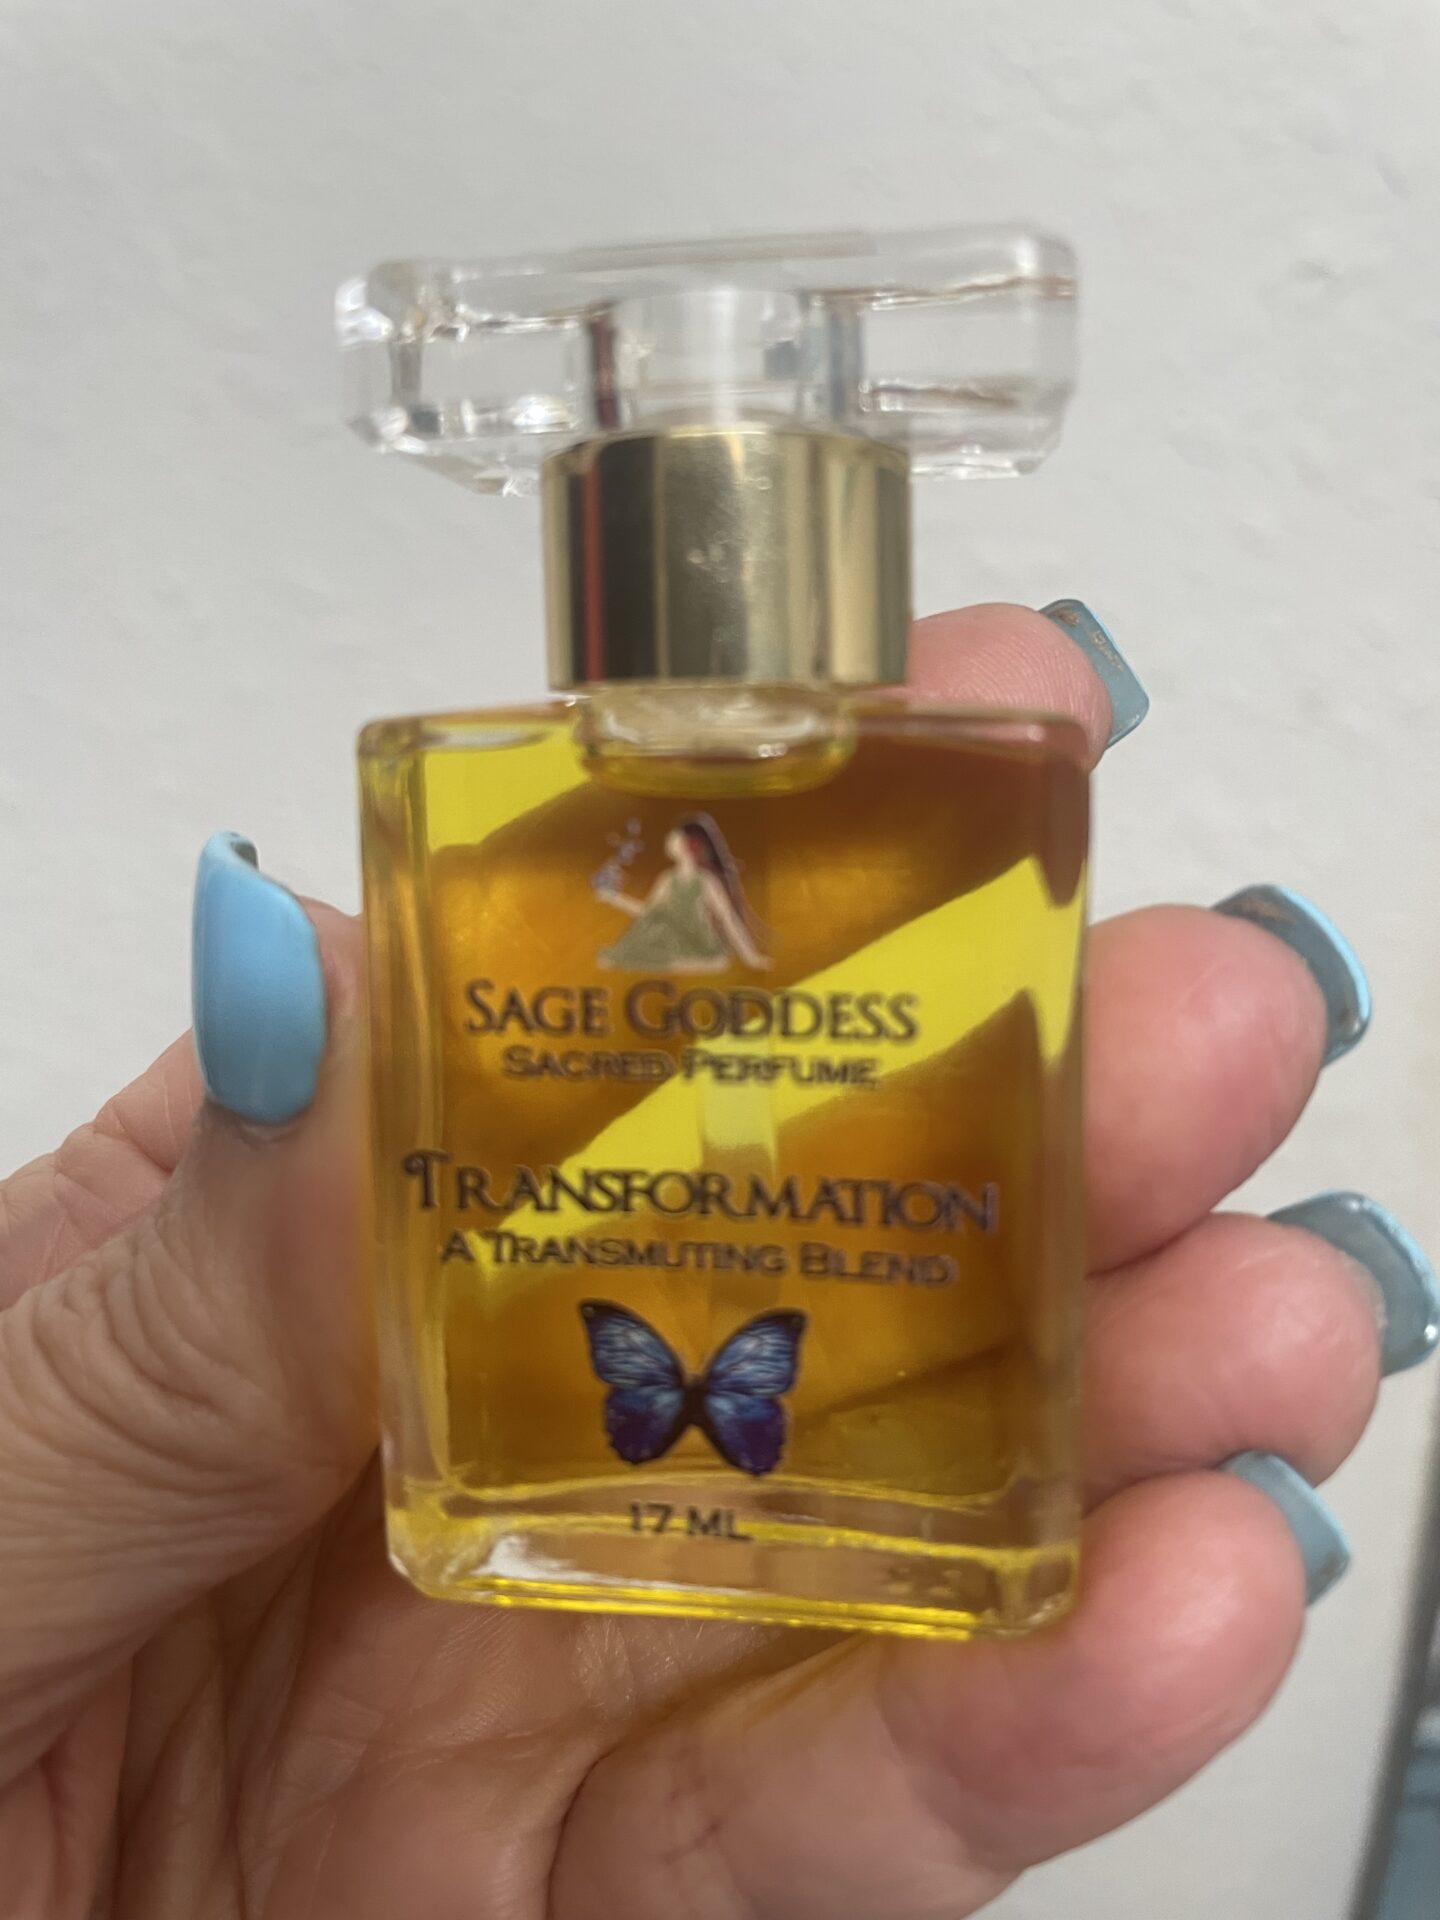 Sage Goddess Transformation Perfume for true inner change